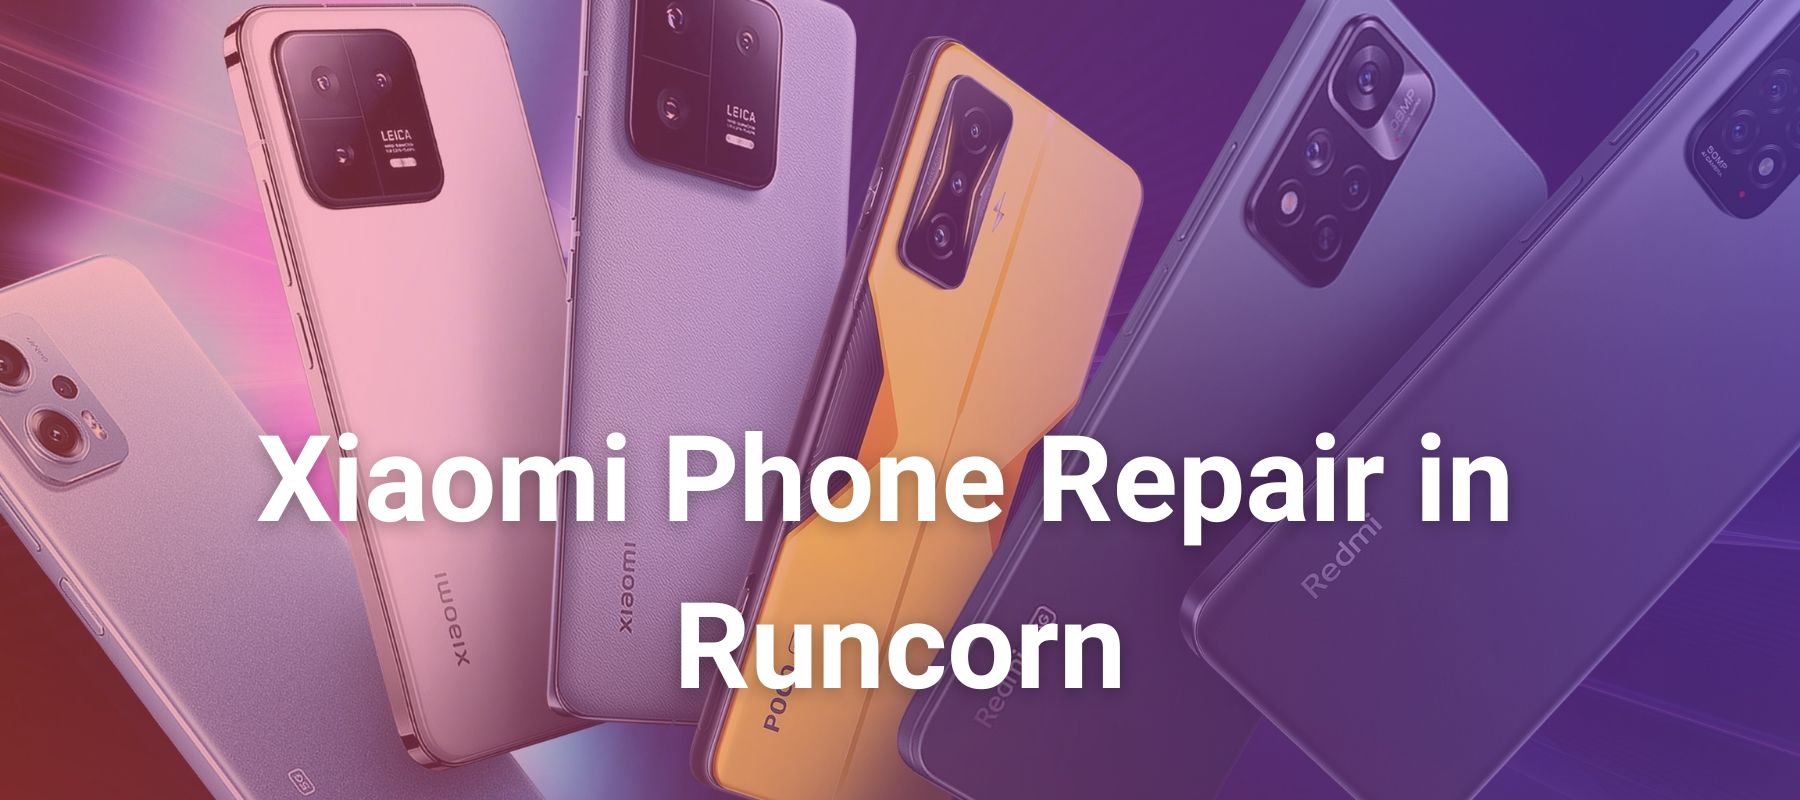 Xiaomi Phone Repair in Runcorn